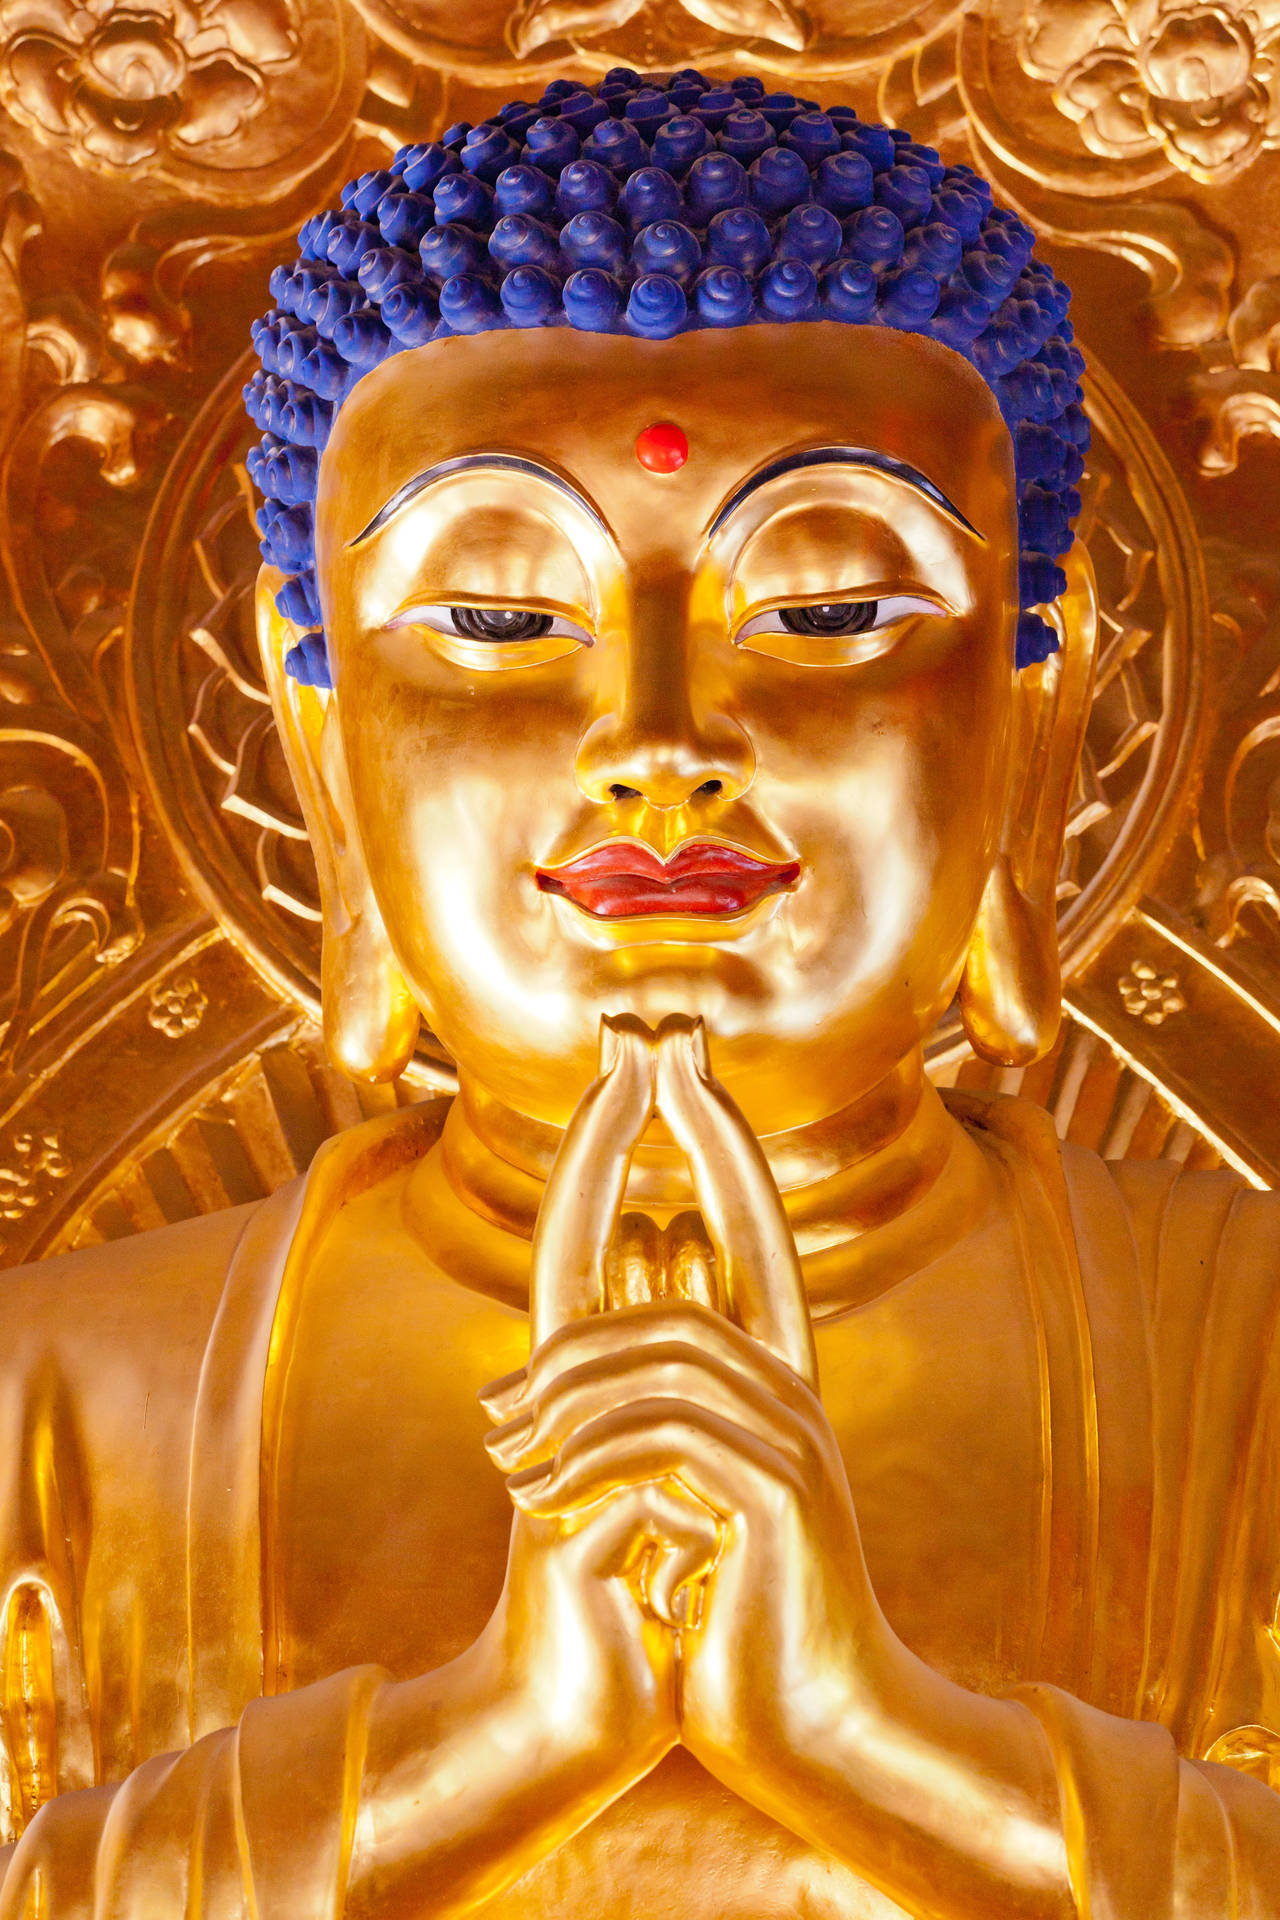 "The Golden Buddha - a symbol of ancient wisdom." Wallpaper